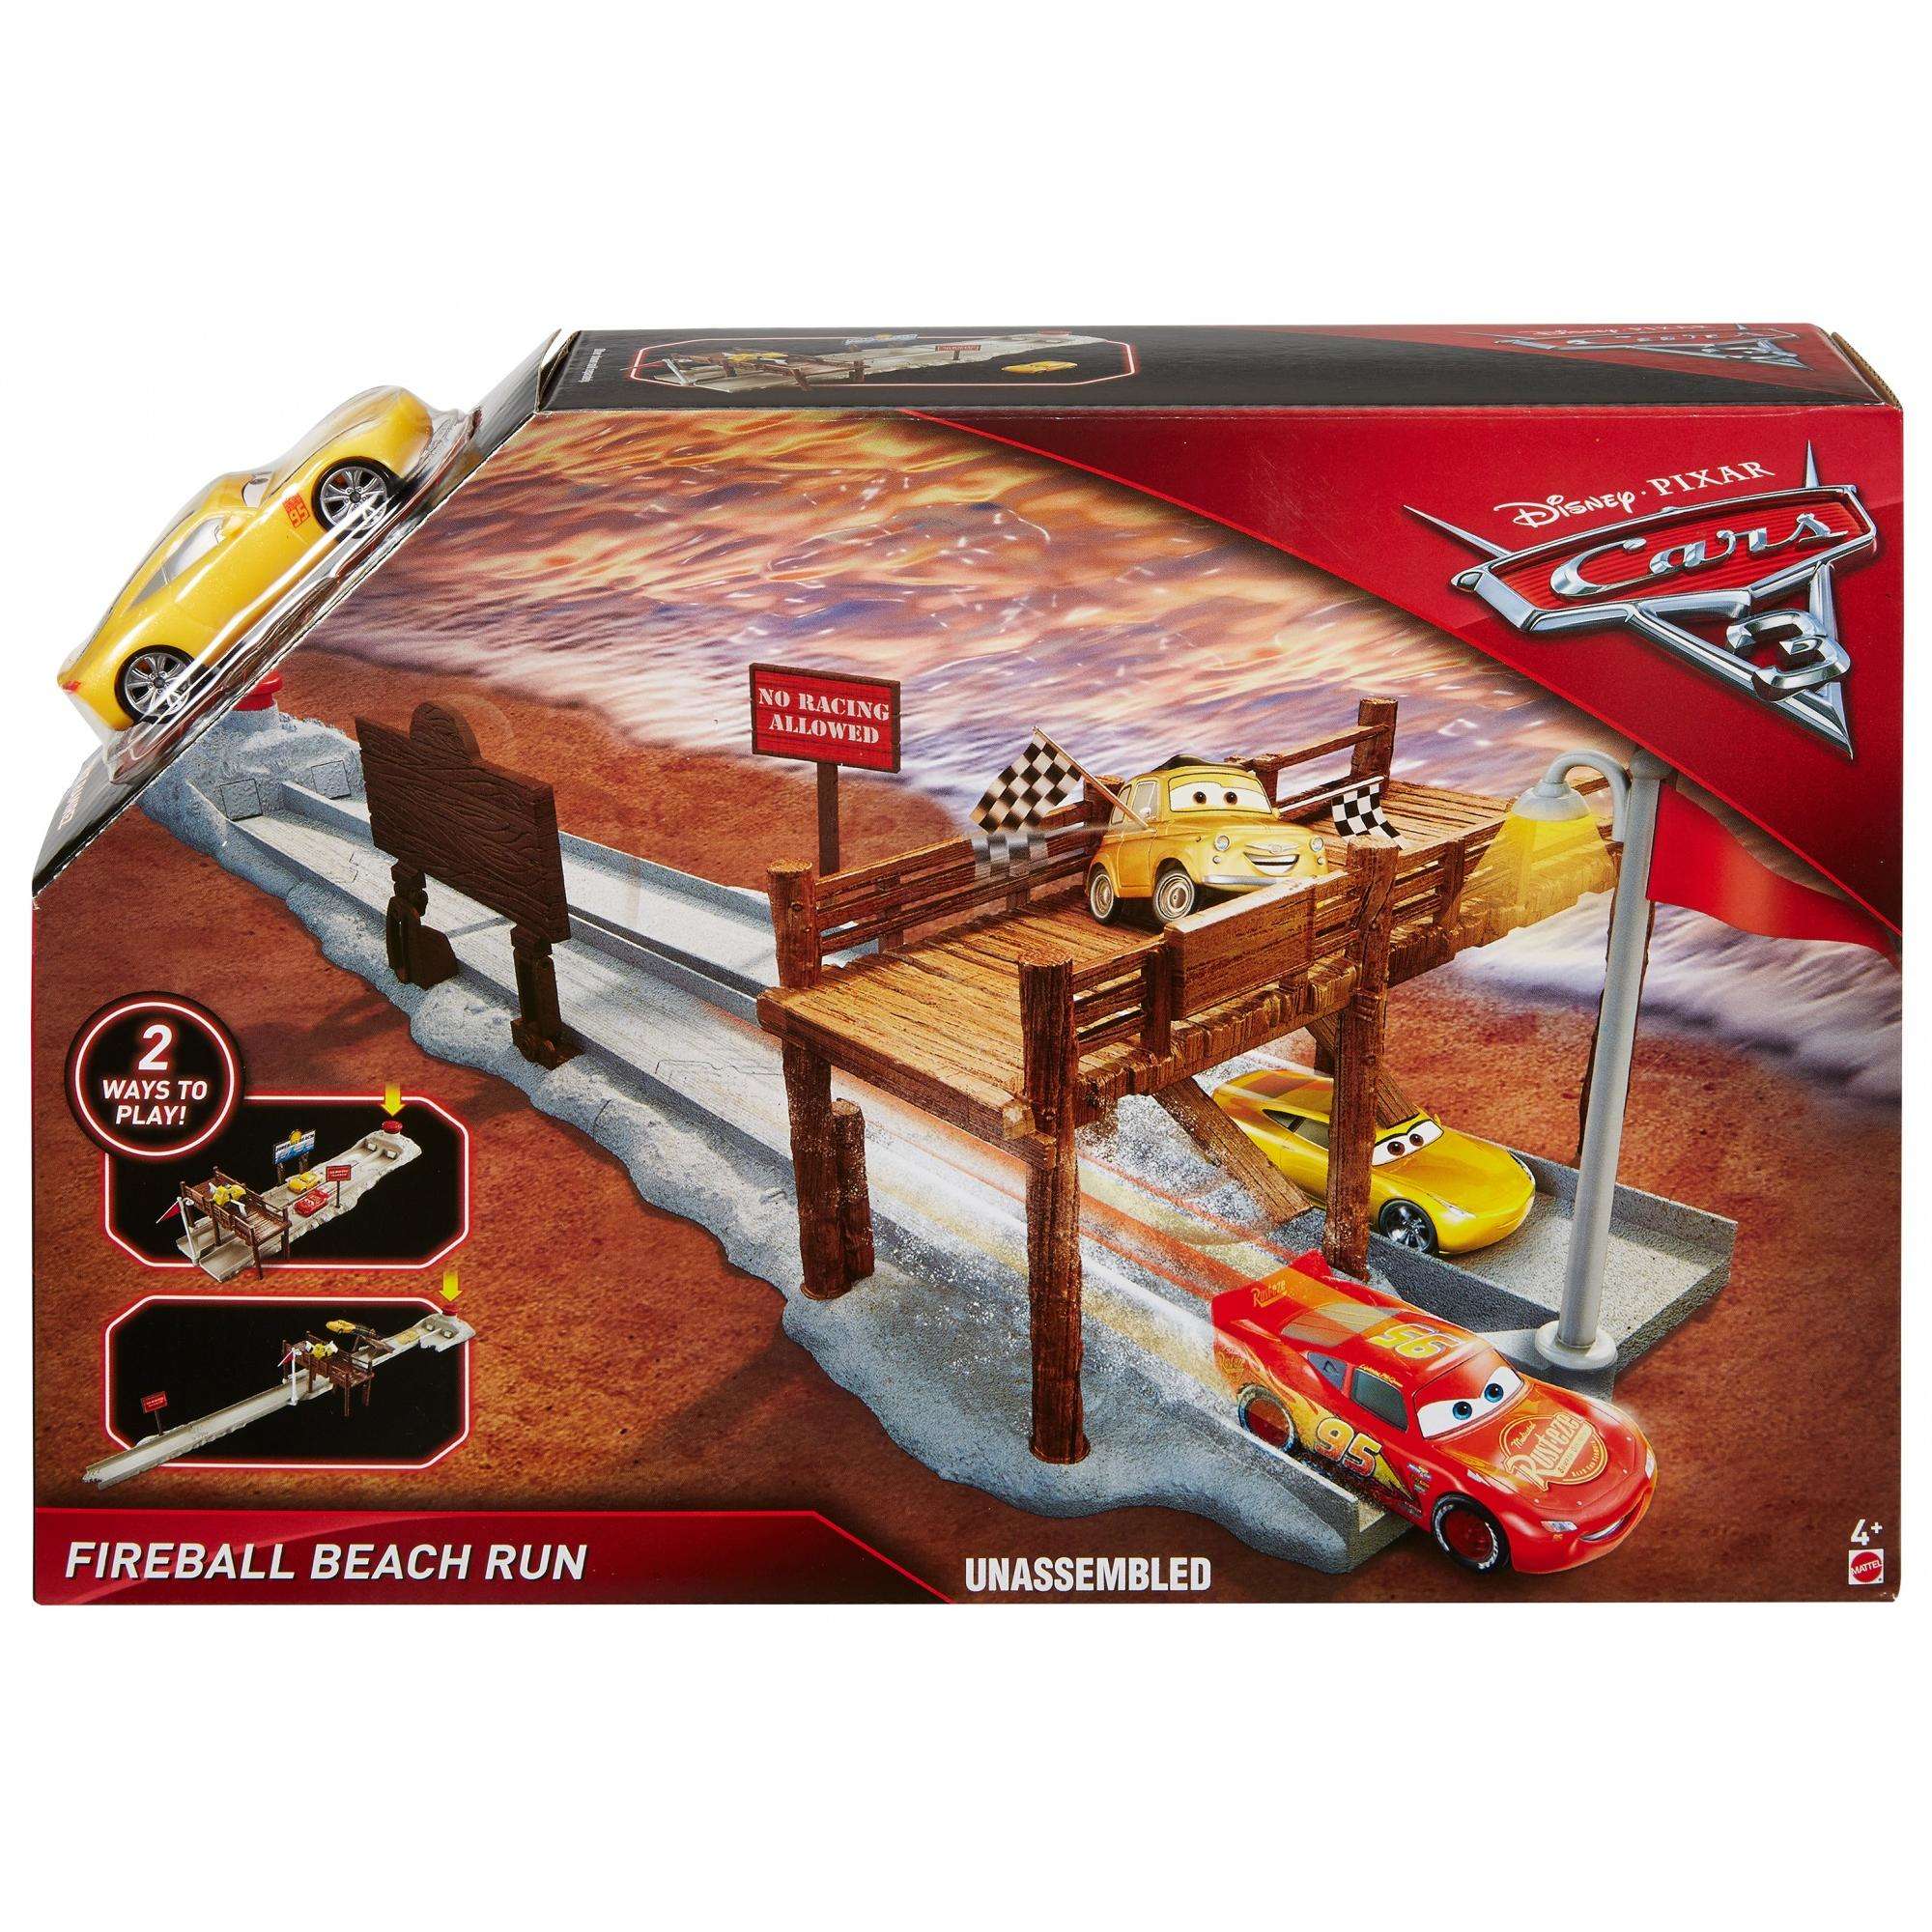 Disney Pixar Cars 3 Fireball Beach Run Playset - image 1 of 10